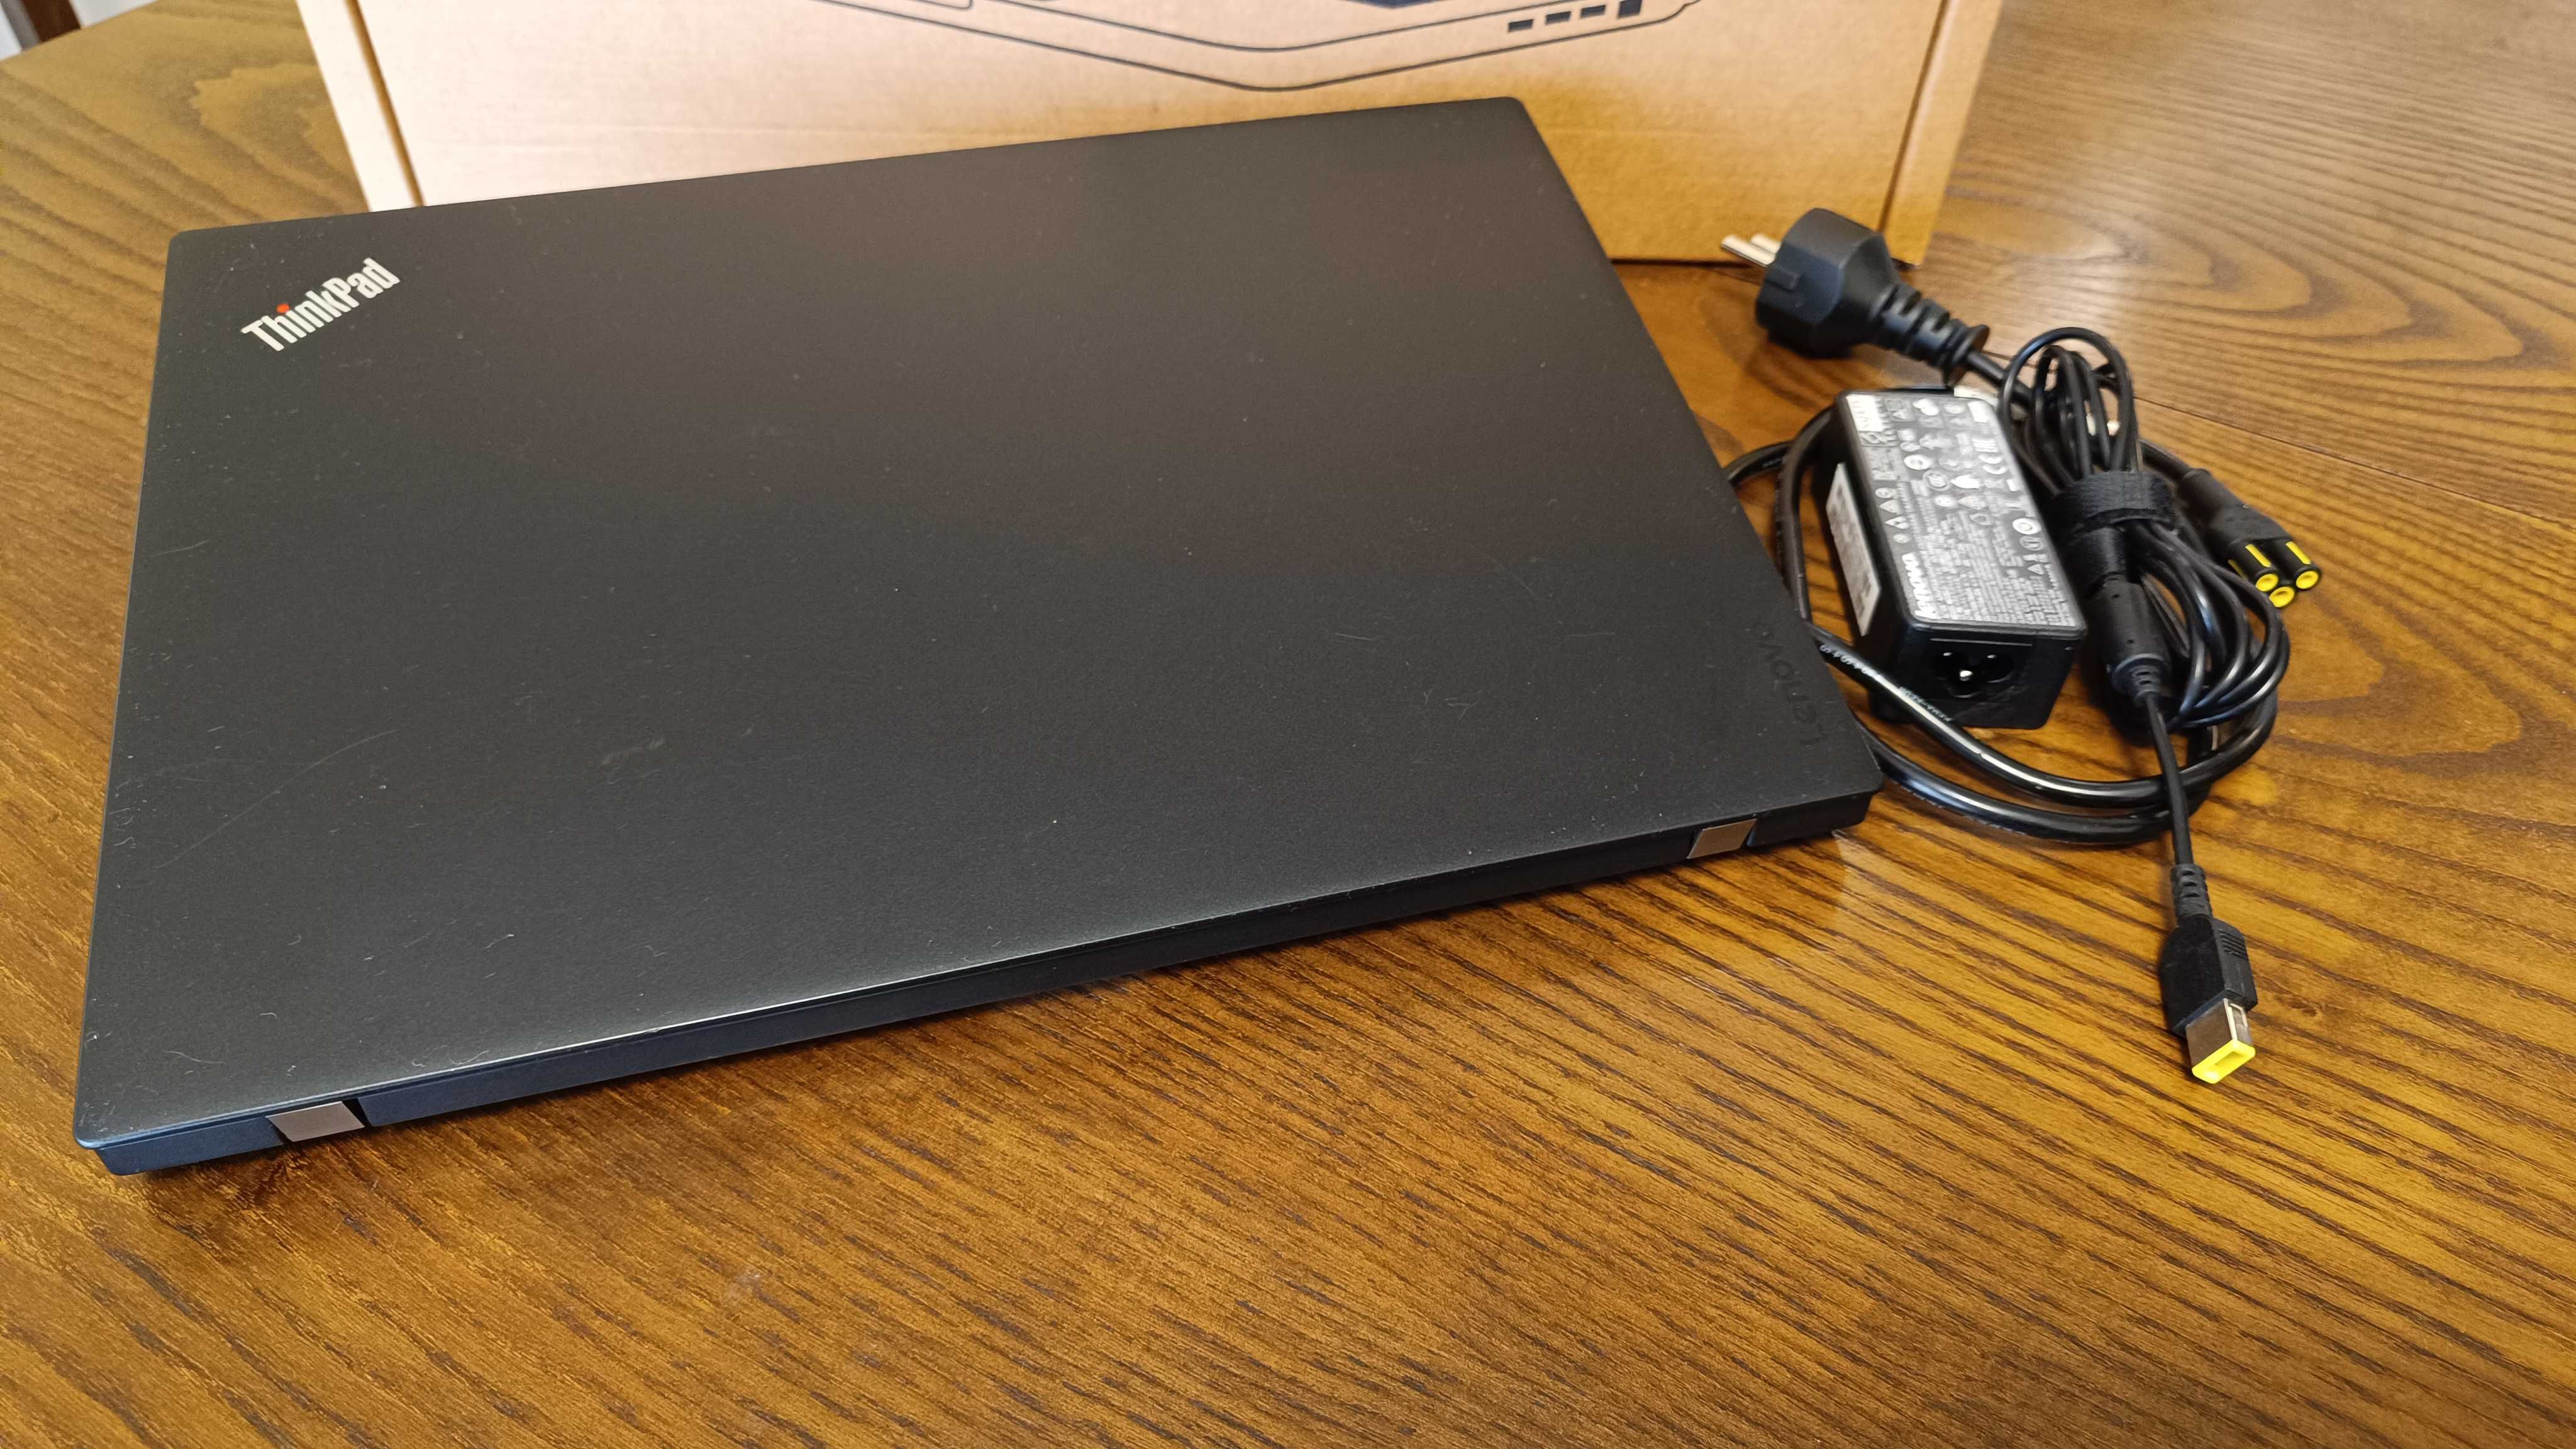 Комплект aвтодиагностика и лаптоп Lenovo с тъчскрийн и двойна батерия